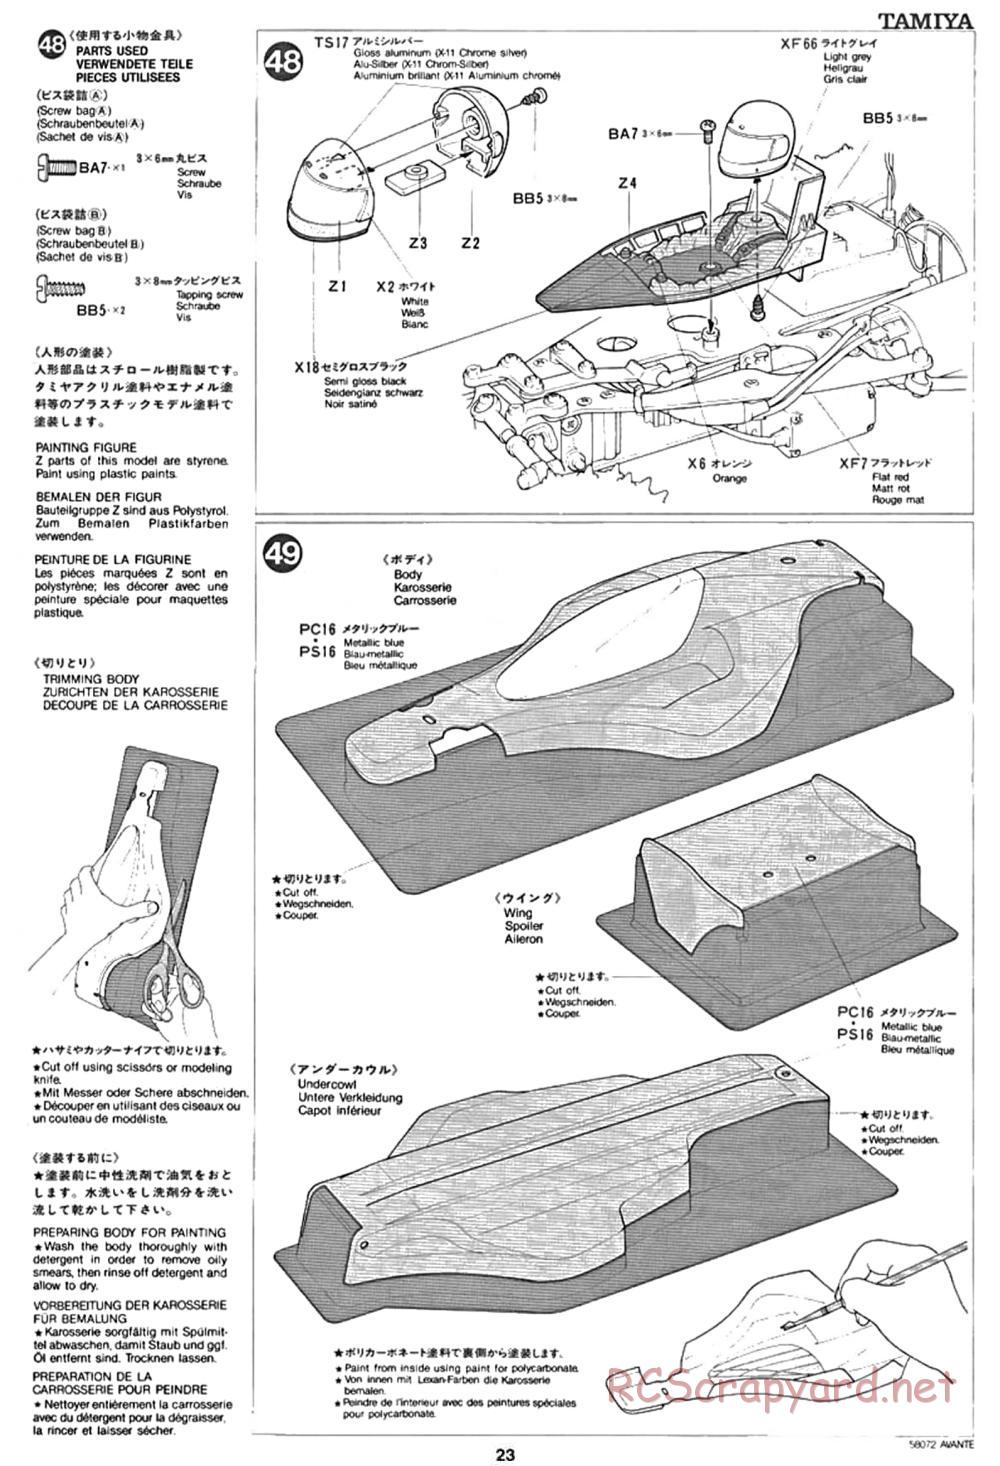 Tamiya - Avante - 58072 - Manual - Page 23